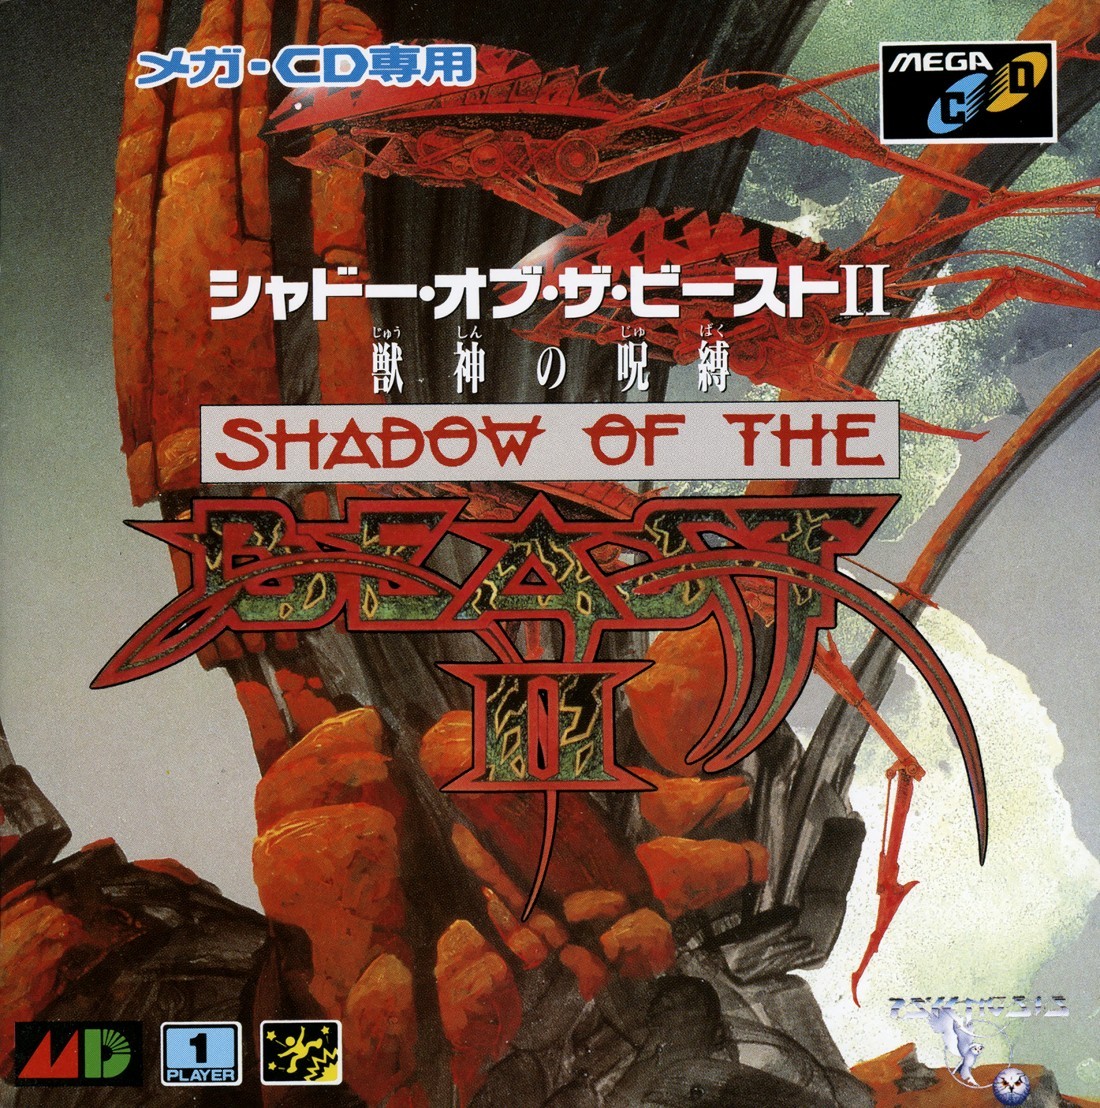 Capa do jogo Shadow of the Beast II